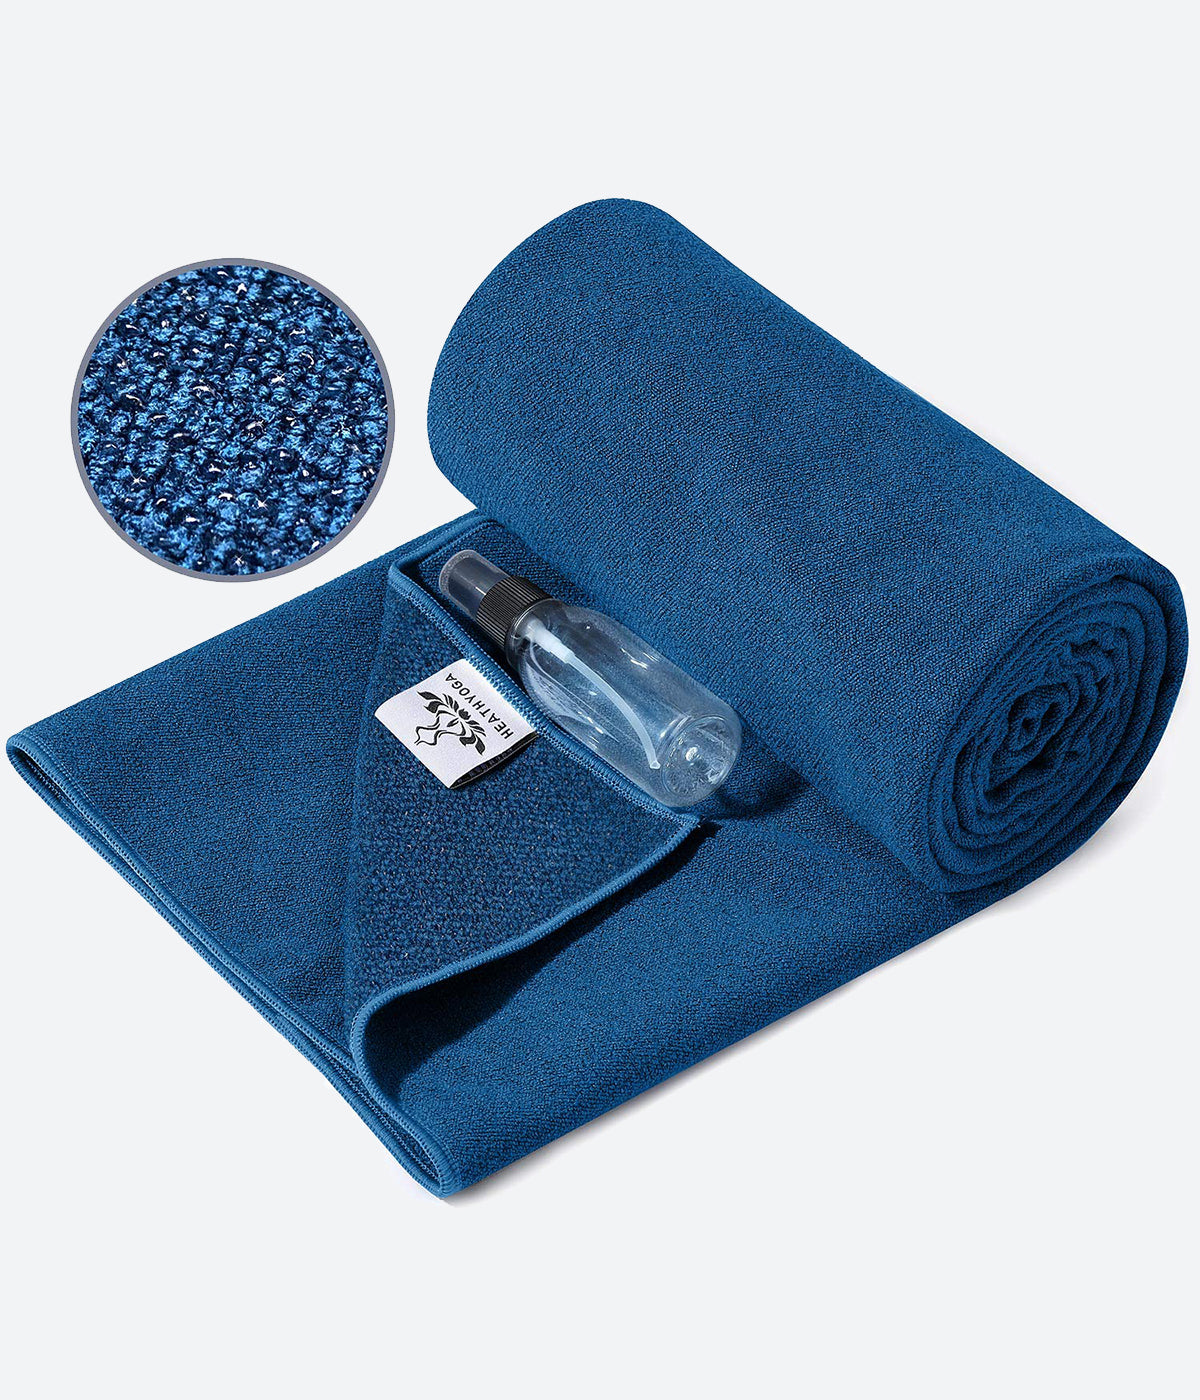 Shandali Hot Yoga Towel - Stickyfiber Yoga Towel - Mat-Sized, Microfiber,  Super